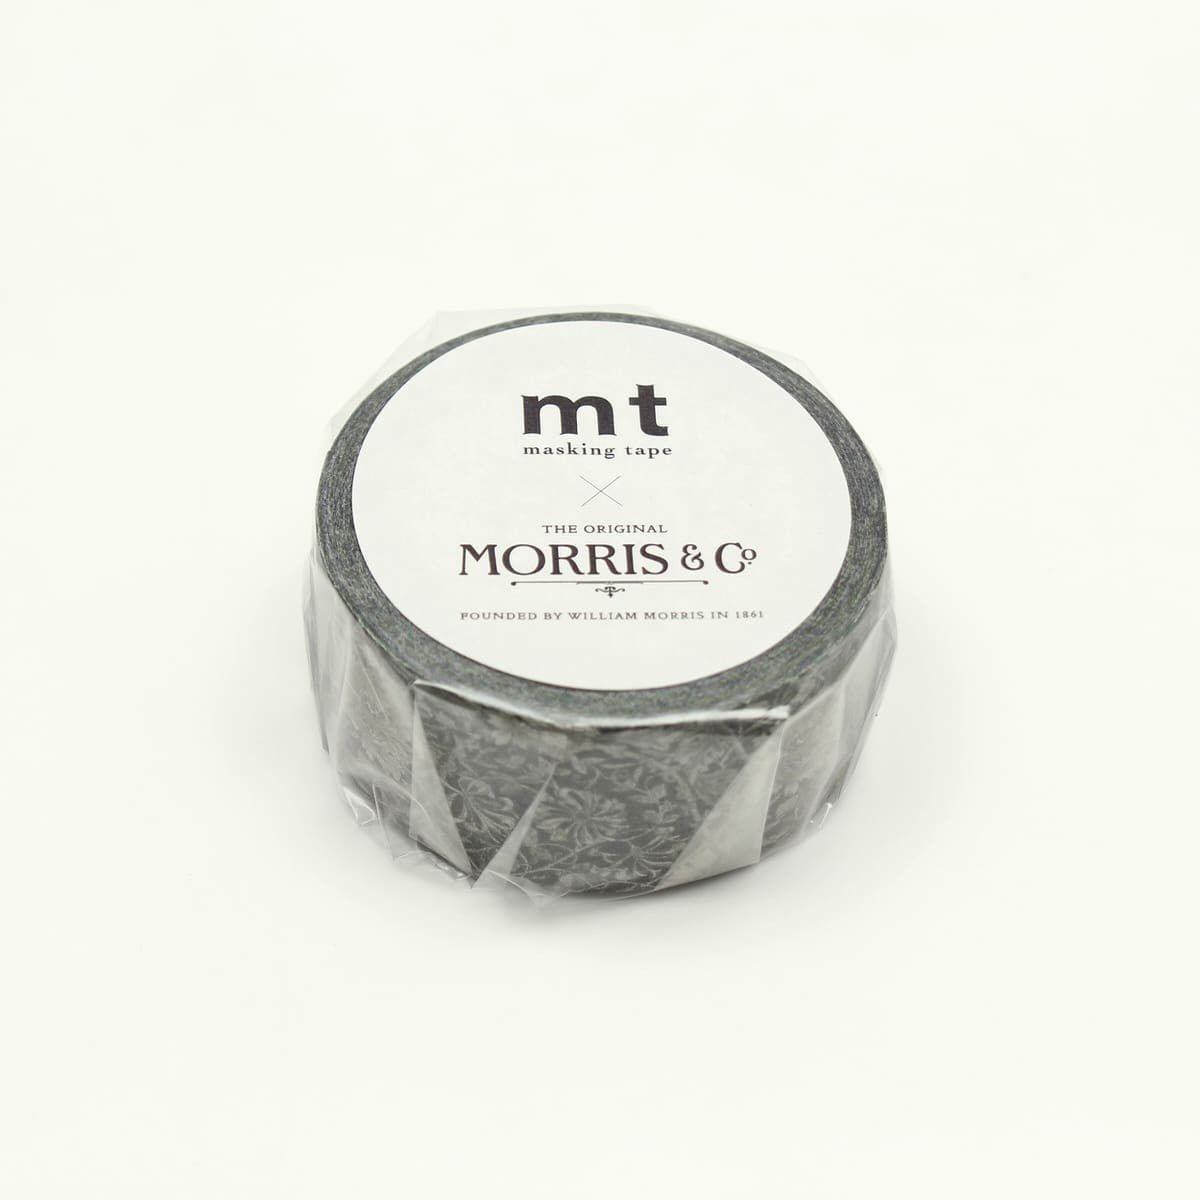 Washi Tape Morris & Co - Honeysuckle & Tulip black ink - MT masking tape - Tidformera